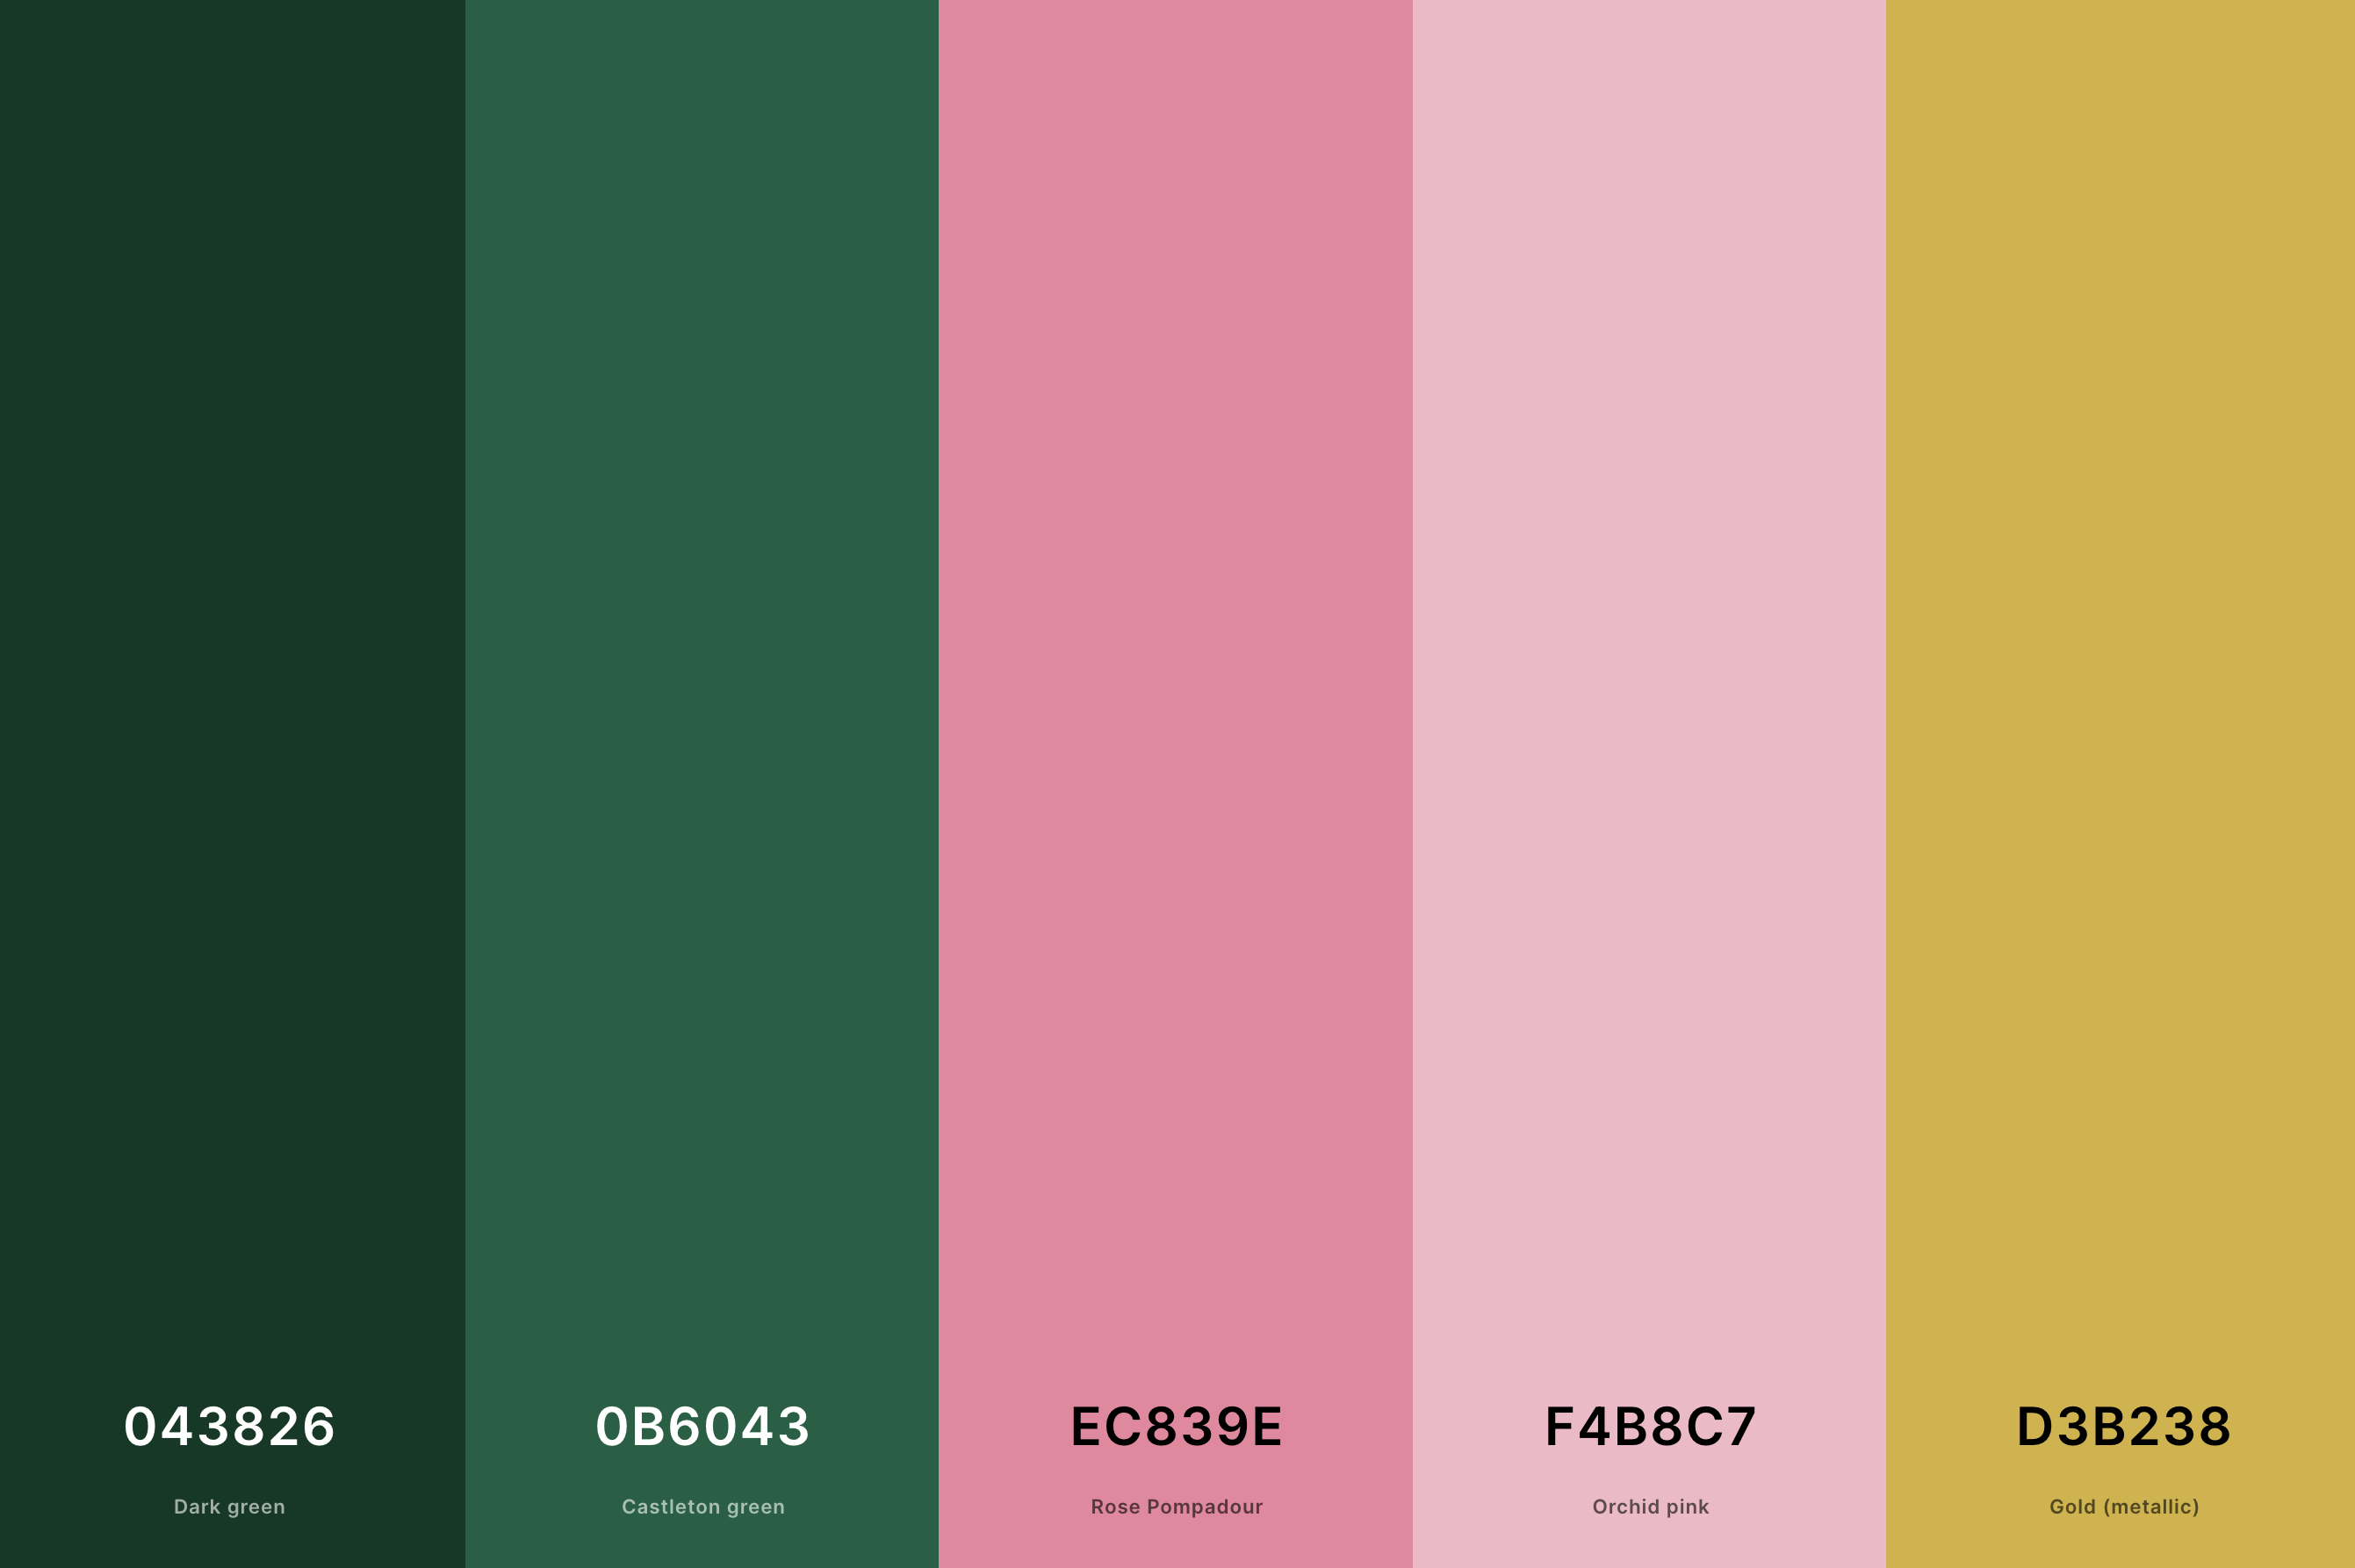 26. Green, Pink And Gold Color Palette Color Palette with Dark Green (Hex #043826) + Castleton Green (Hex #0B6043) + Rose Pompadour (Hex #EC839E) + Orchid Pink (Hex #F4B8C7) + Gold (Metallic) (Hex #D3B238) Color Palette with Hex Codes